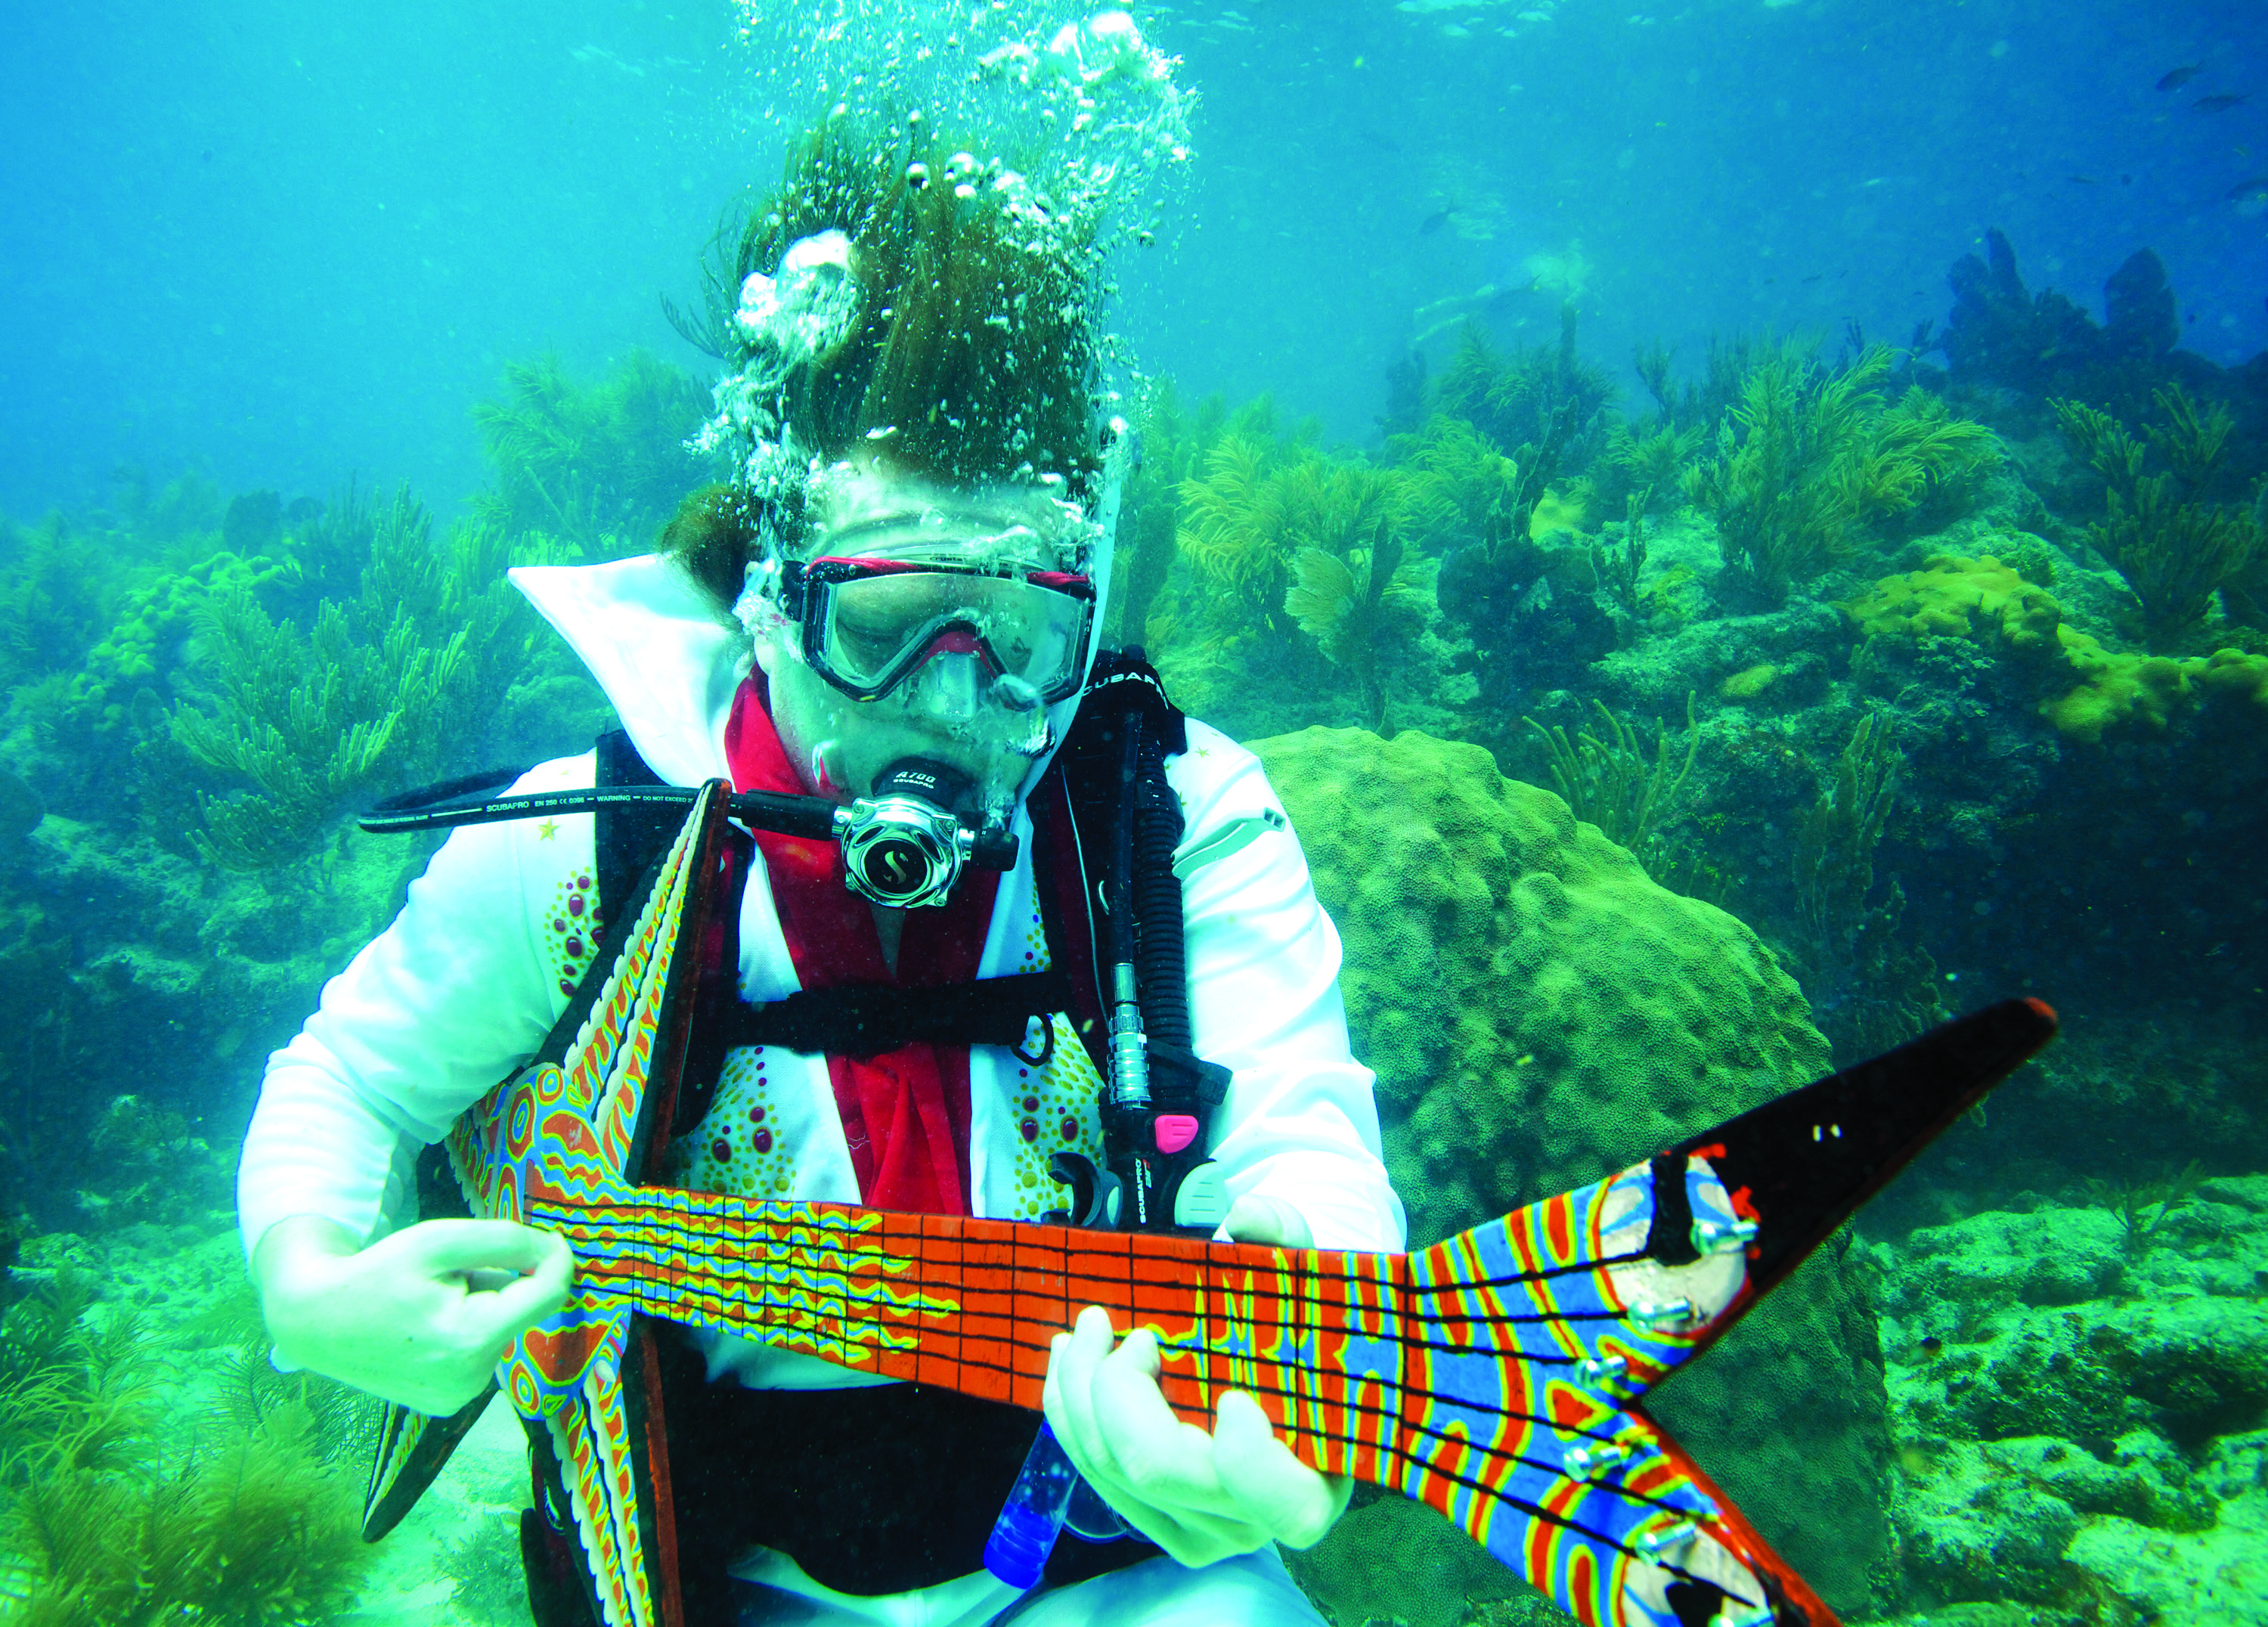 underwater music fest